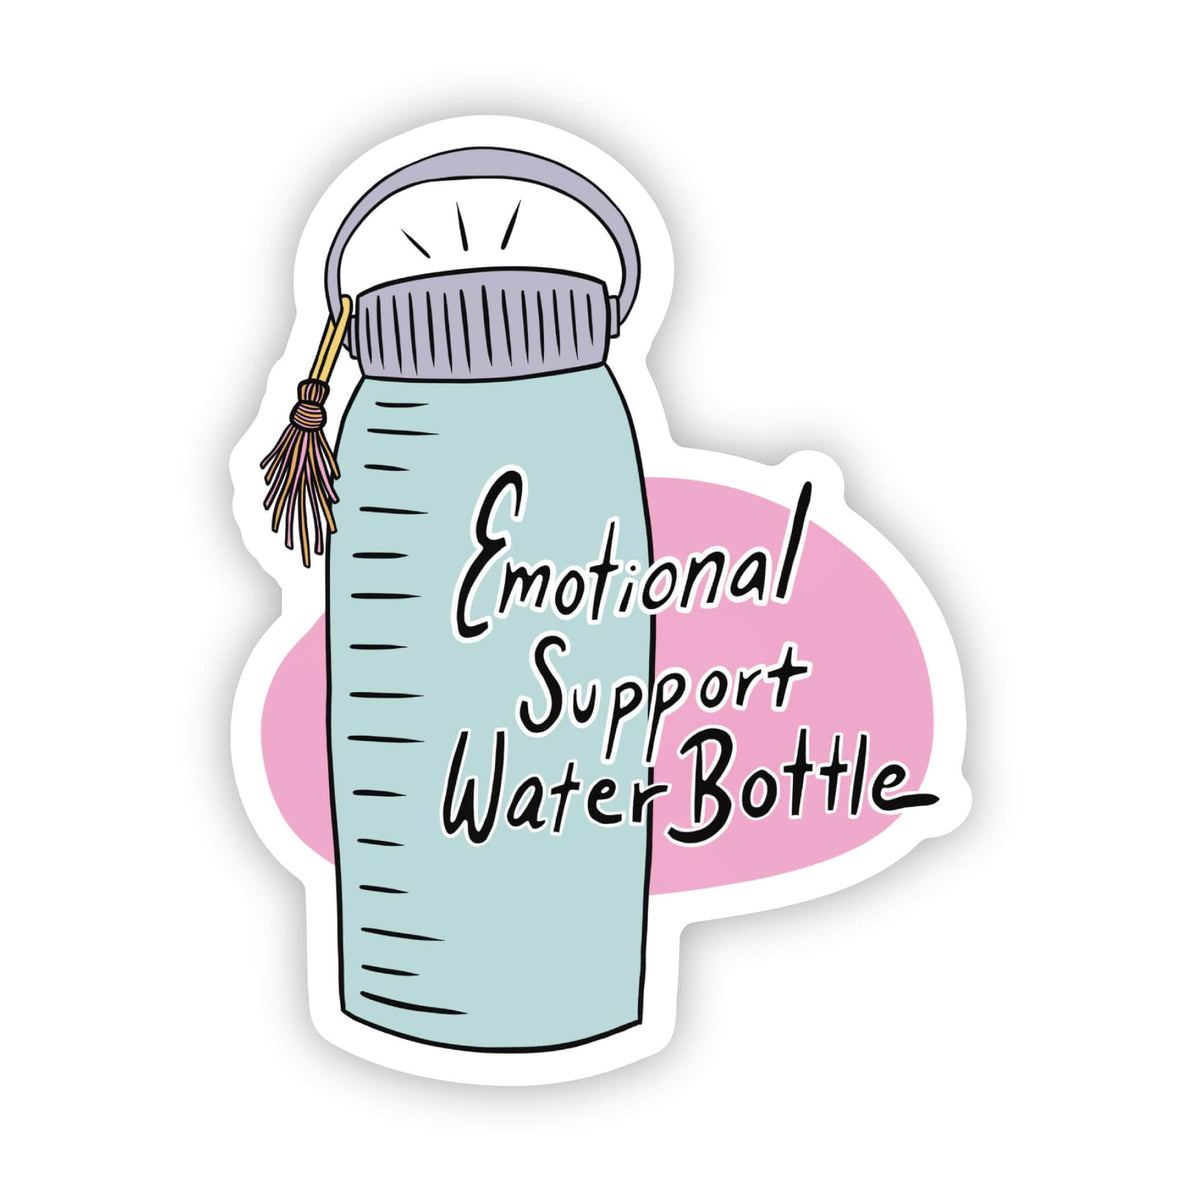 "Emotional support water bottle" sticker